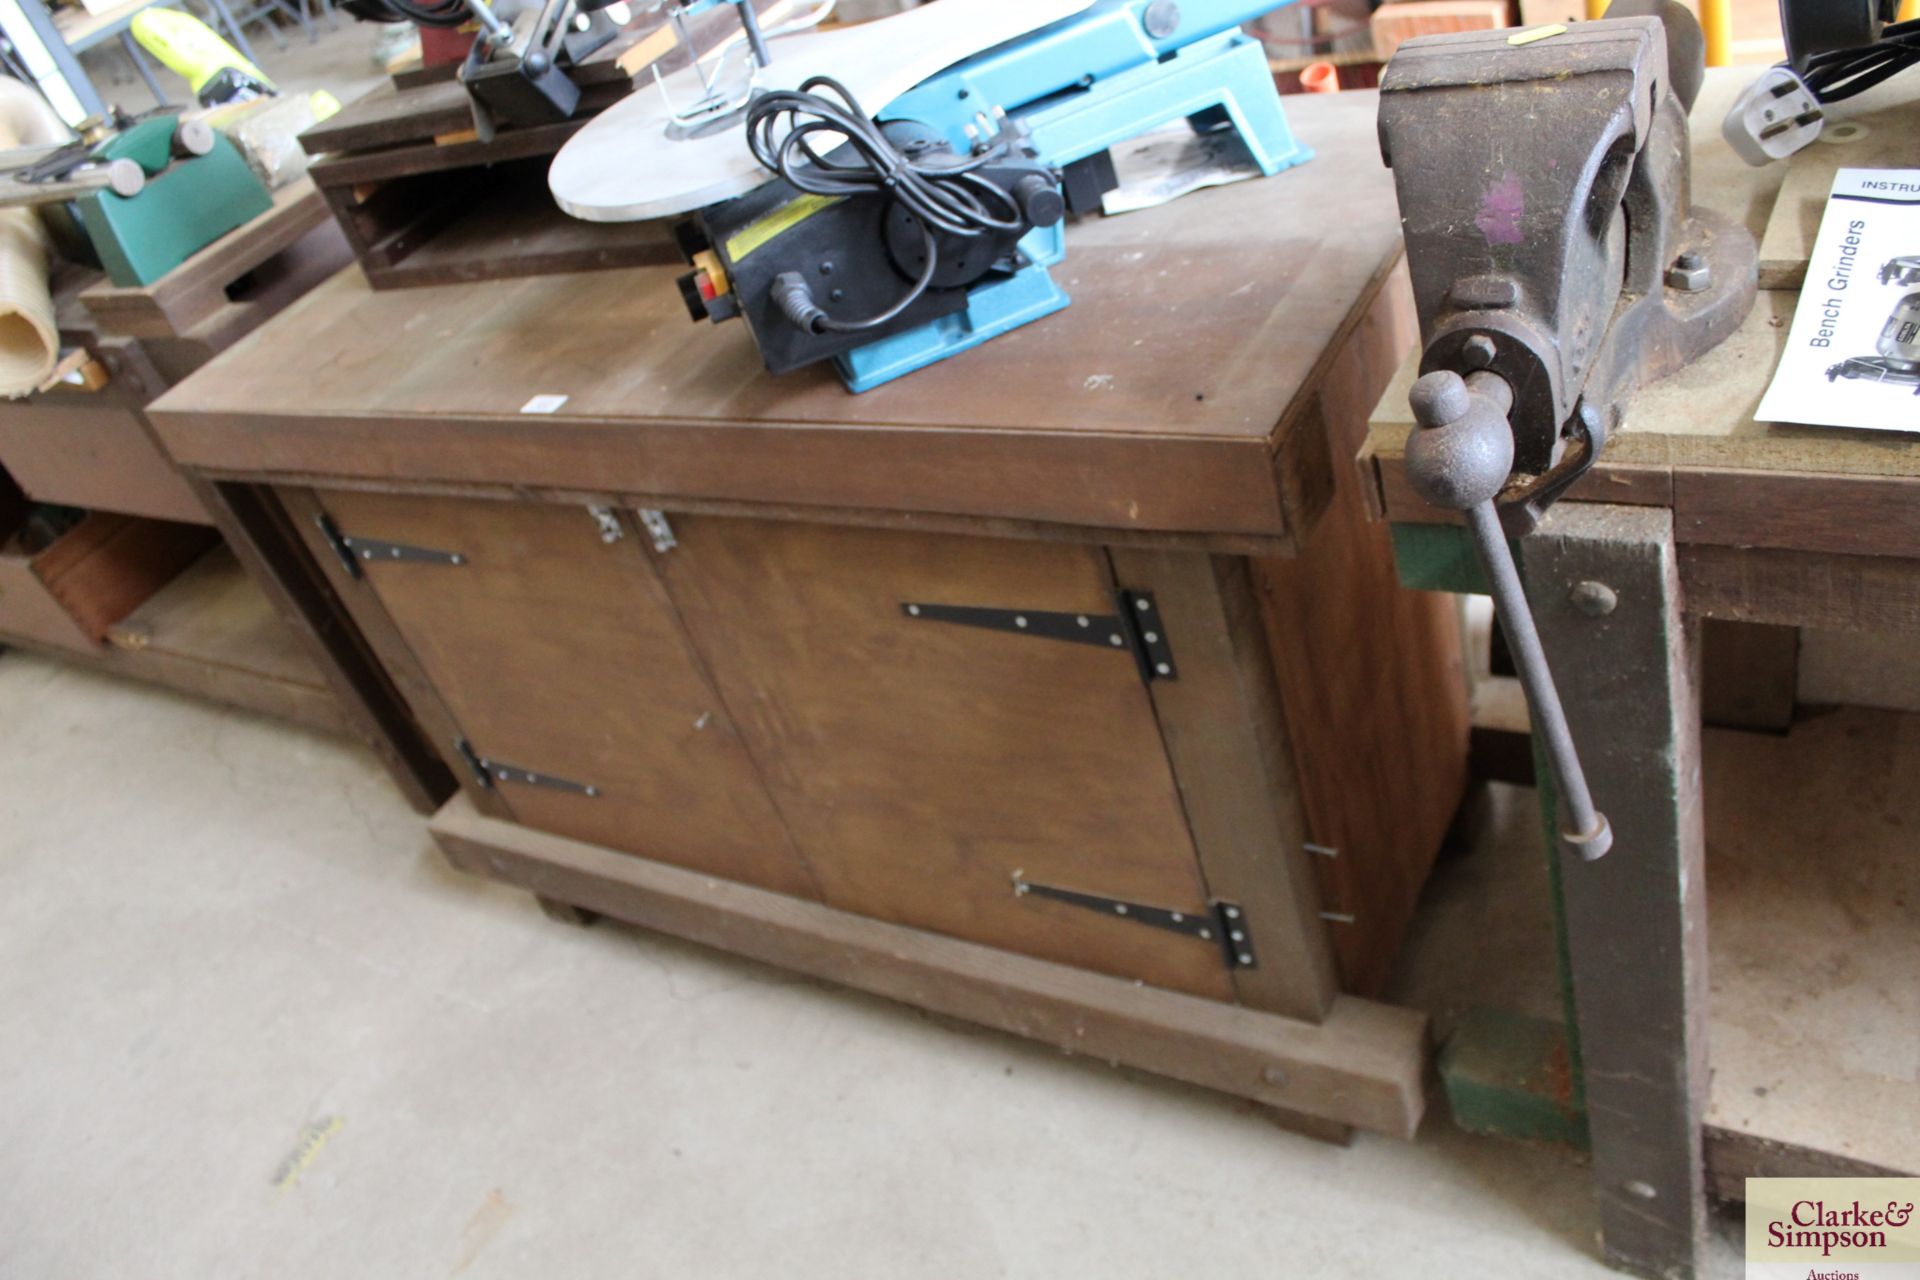 Approx. 1.2m wooden workshop cabinet with storage below.